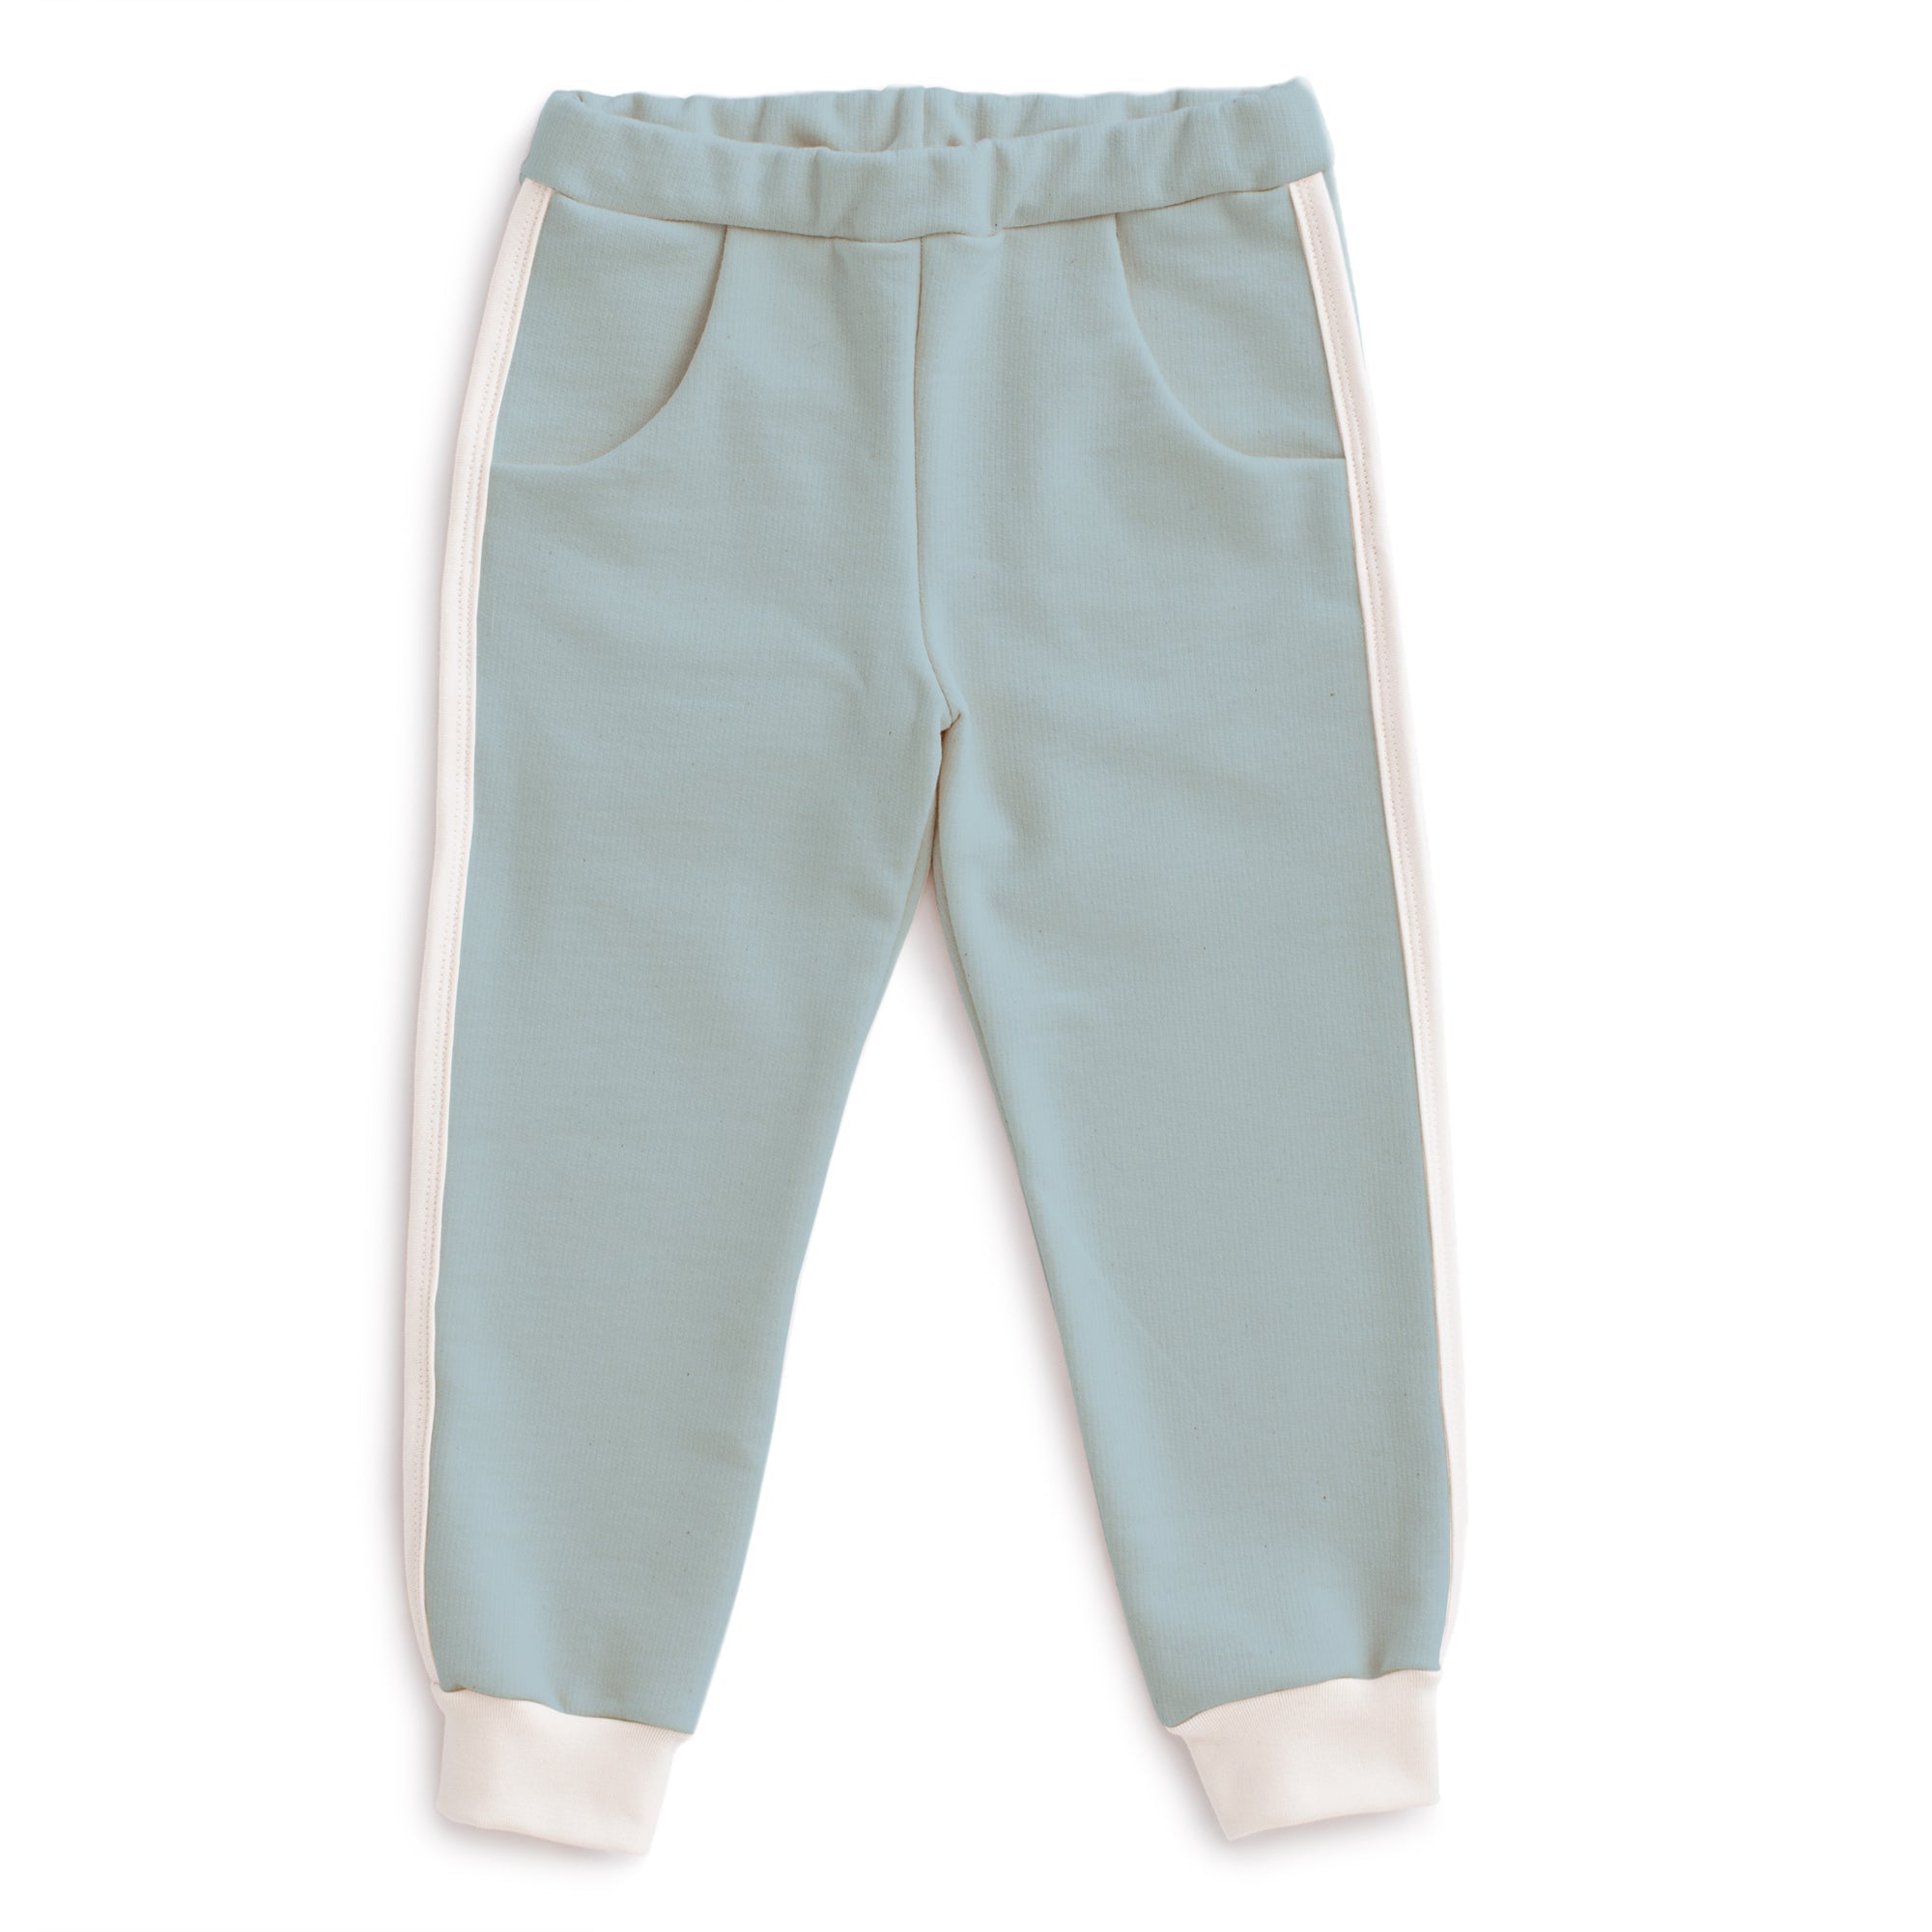 Buy Green Track Pants for Men by BIG BANANA Online | Ajio.com